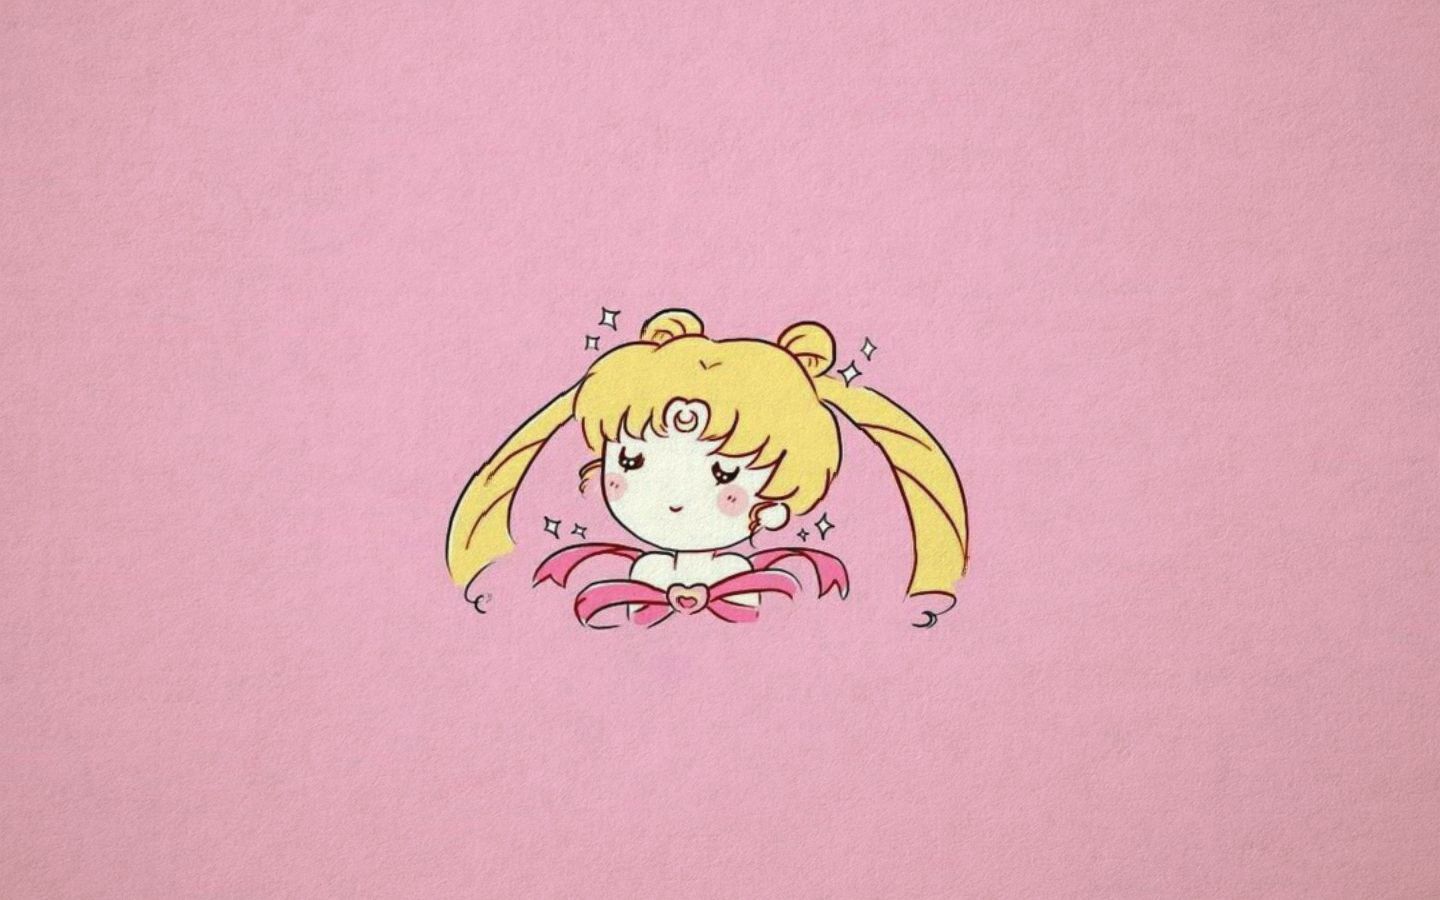 Wallpaper Chibi Sailor Moon (1440 × 900). Sailor moon wallpaper, Sailor moon background, Sailor moon aesthetic